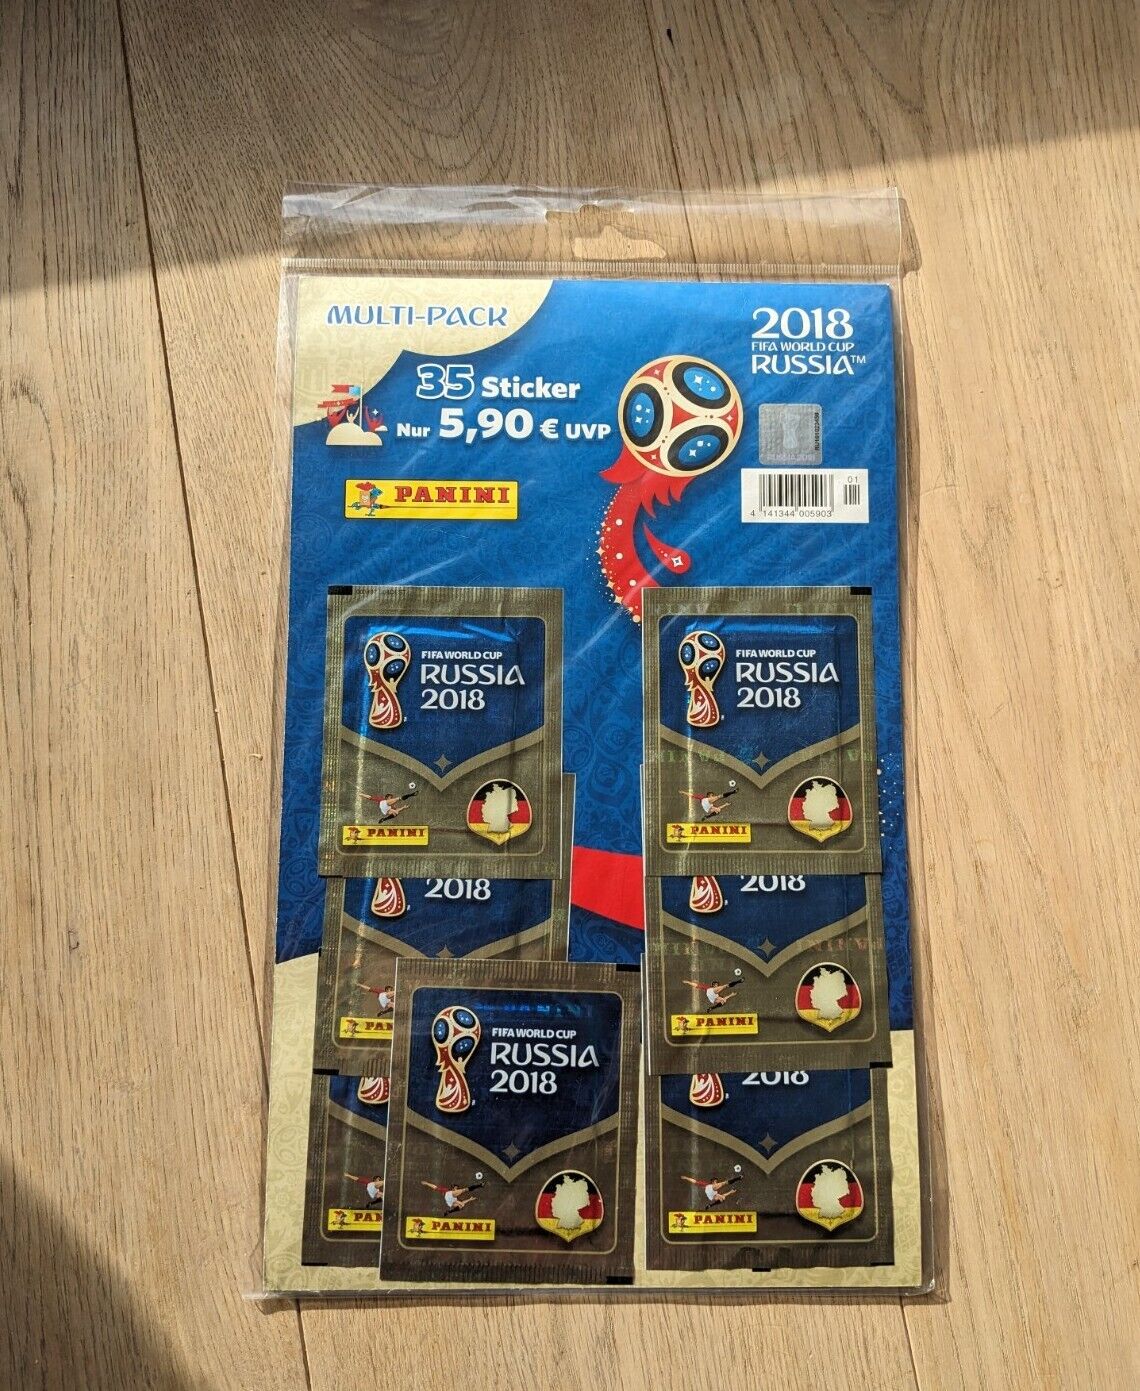 Panini World Cup toilet 2018 multi pack 7 bags = 35 stickers original packaging new Messi Ronaldo 